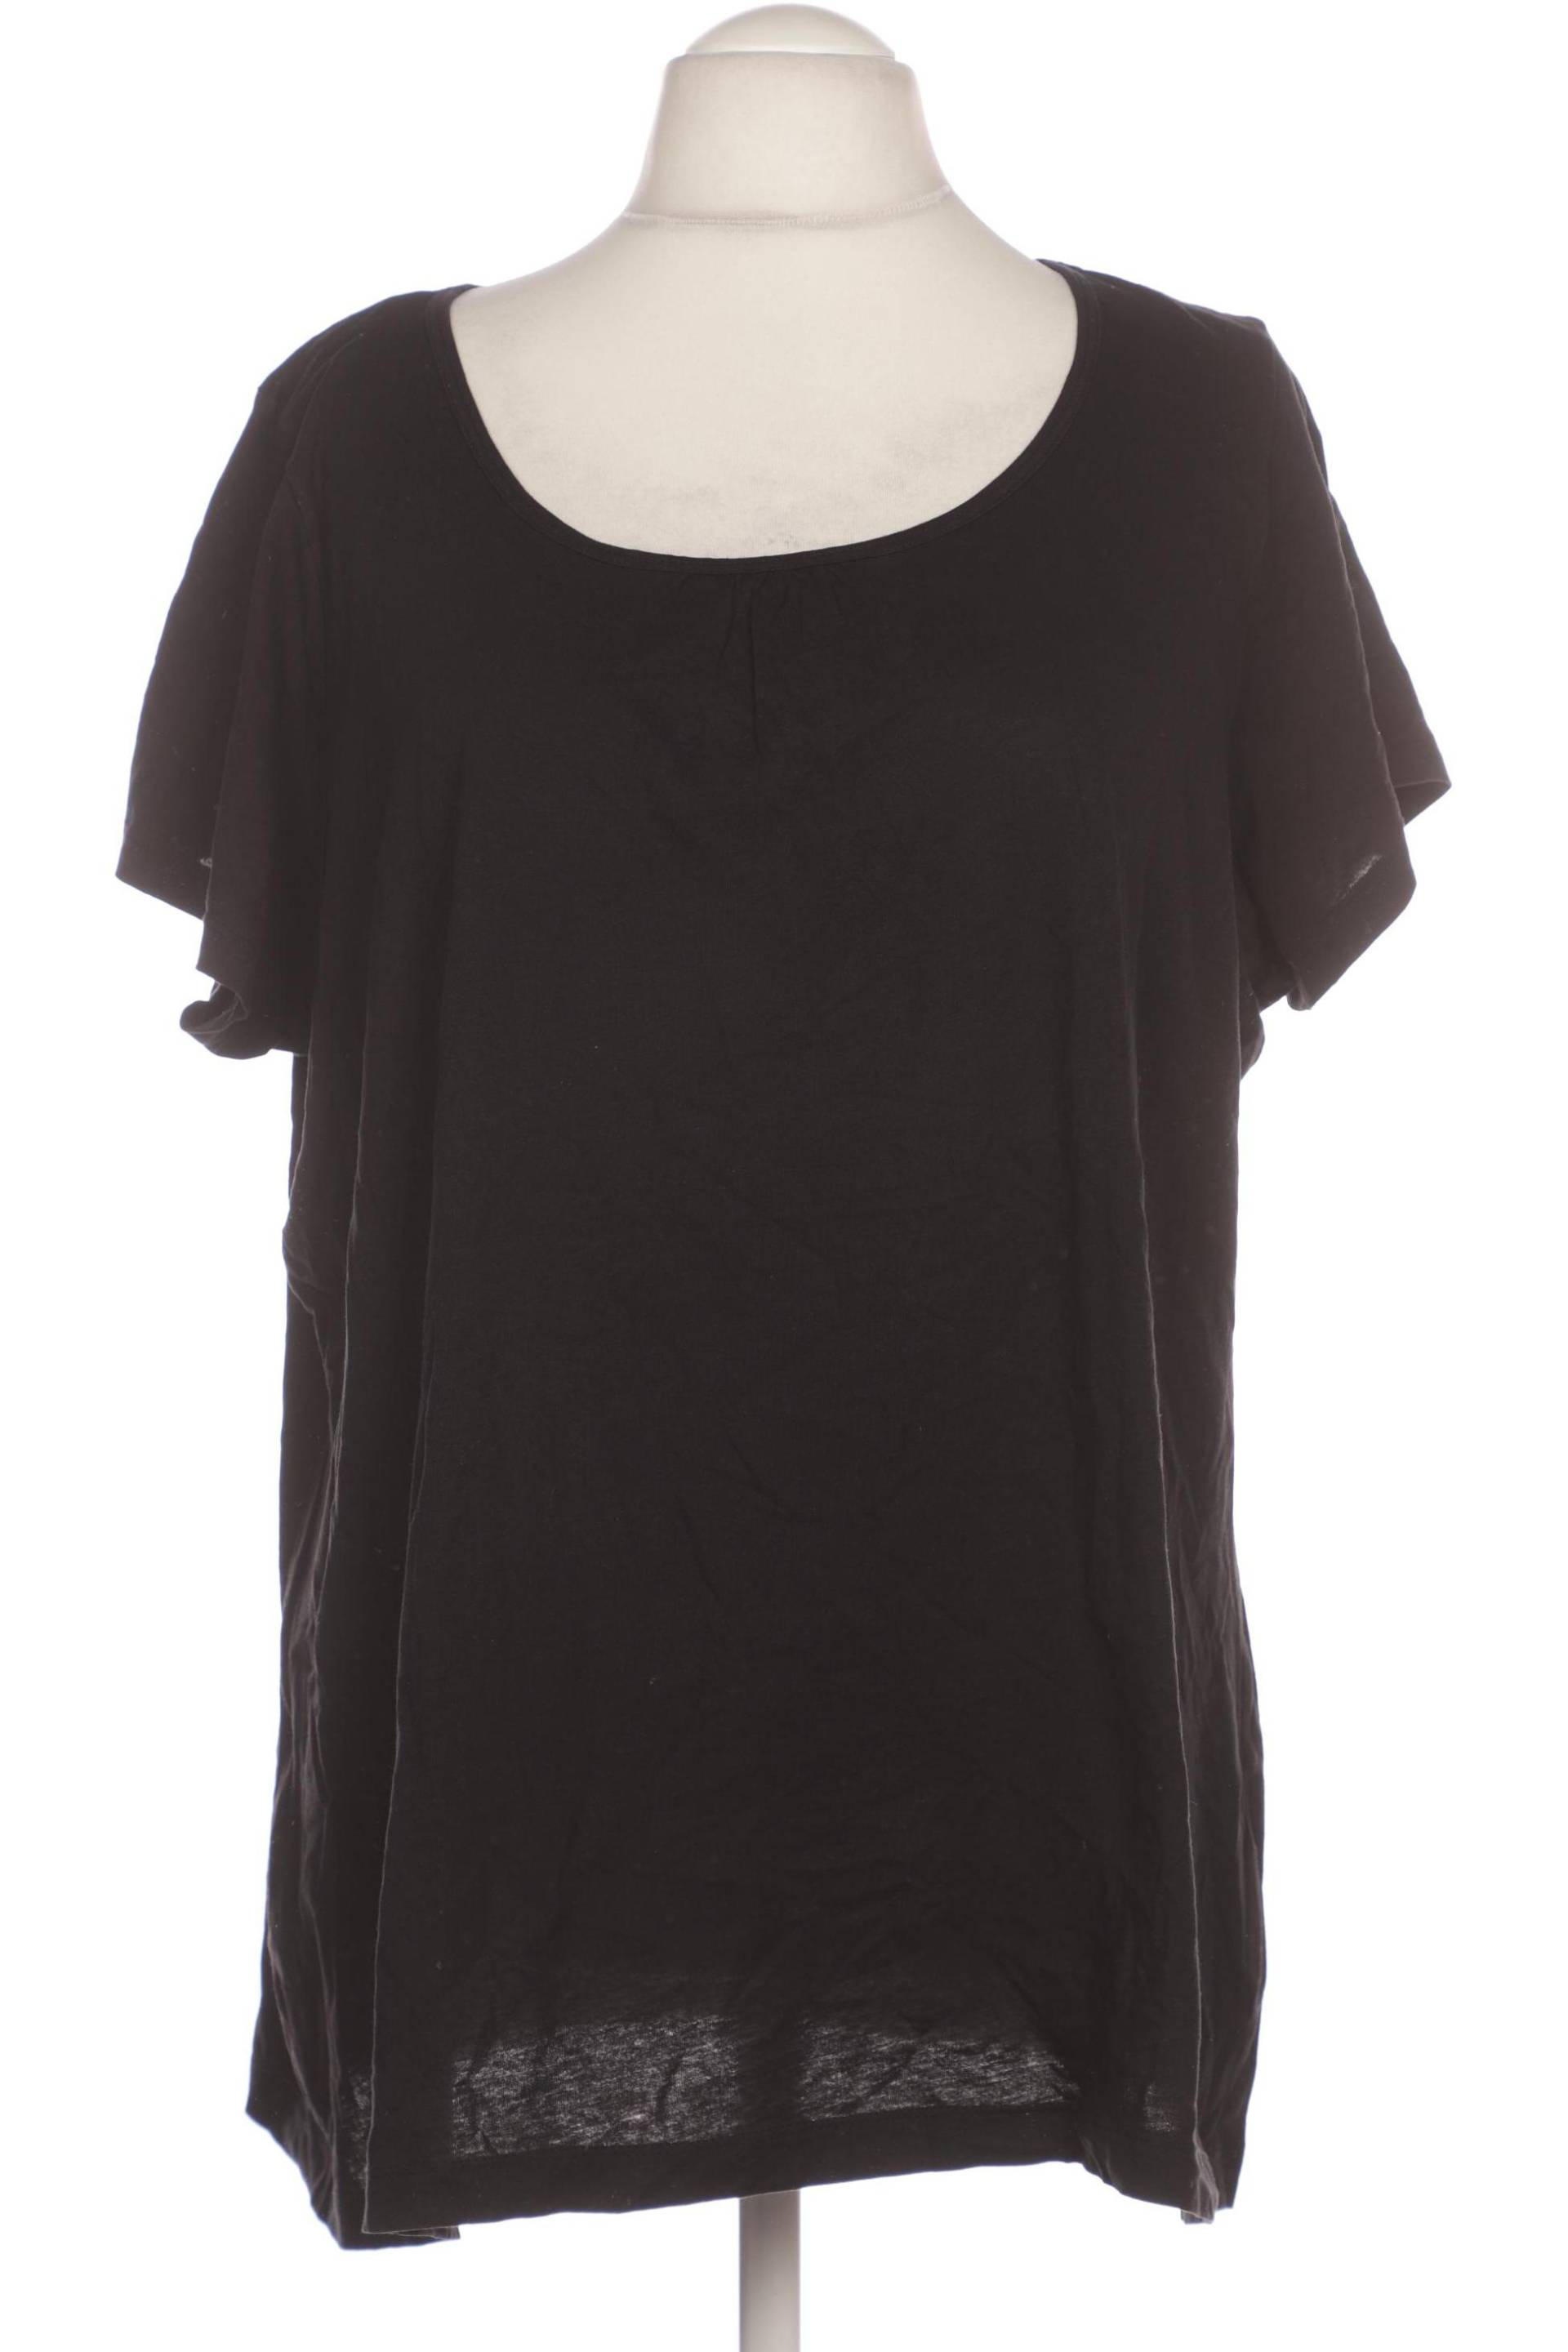 Kiabi Damen T-Shirt, schwarz, Gr. 54 von Kiabi